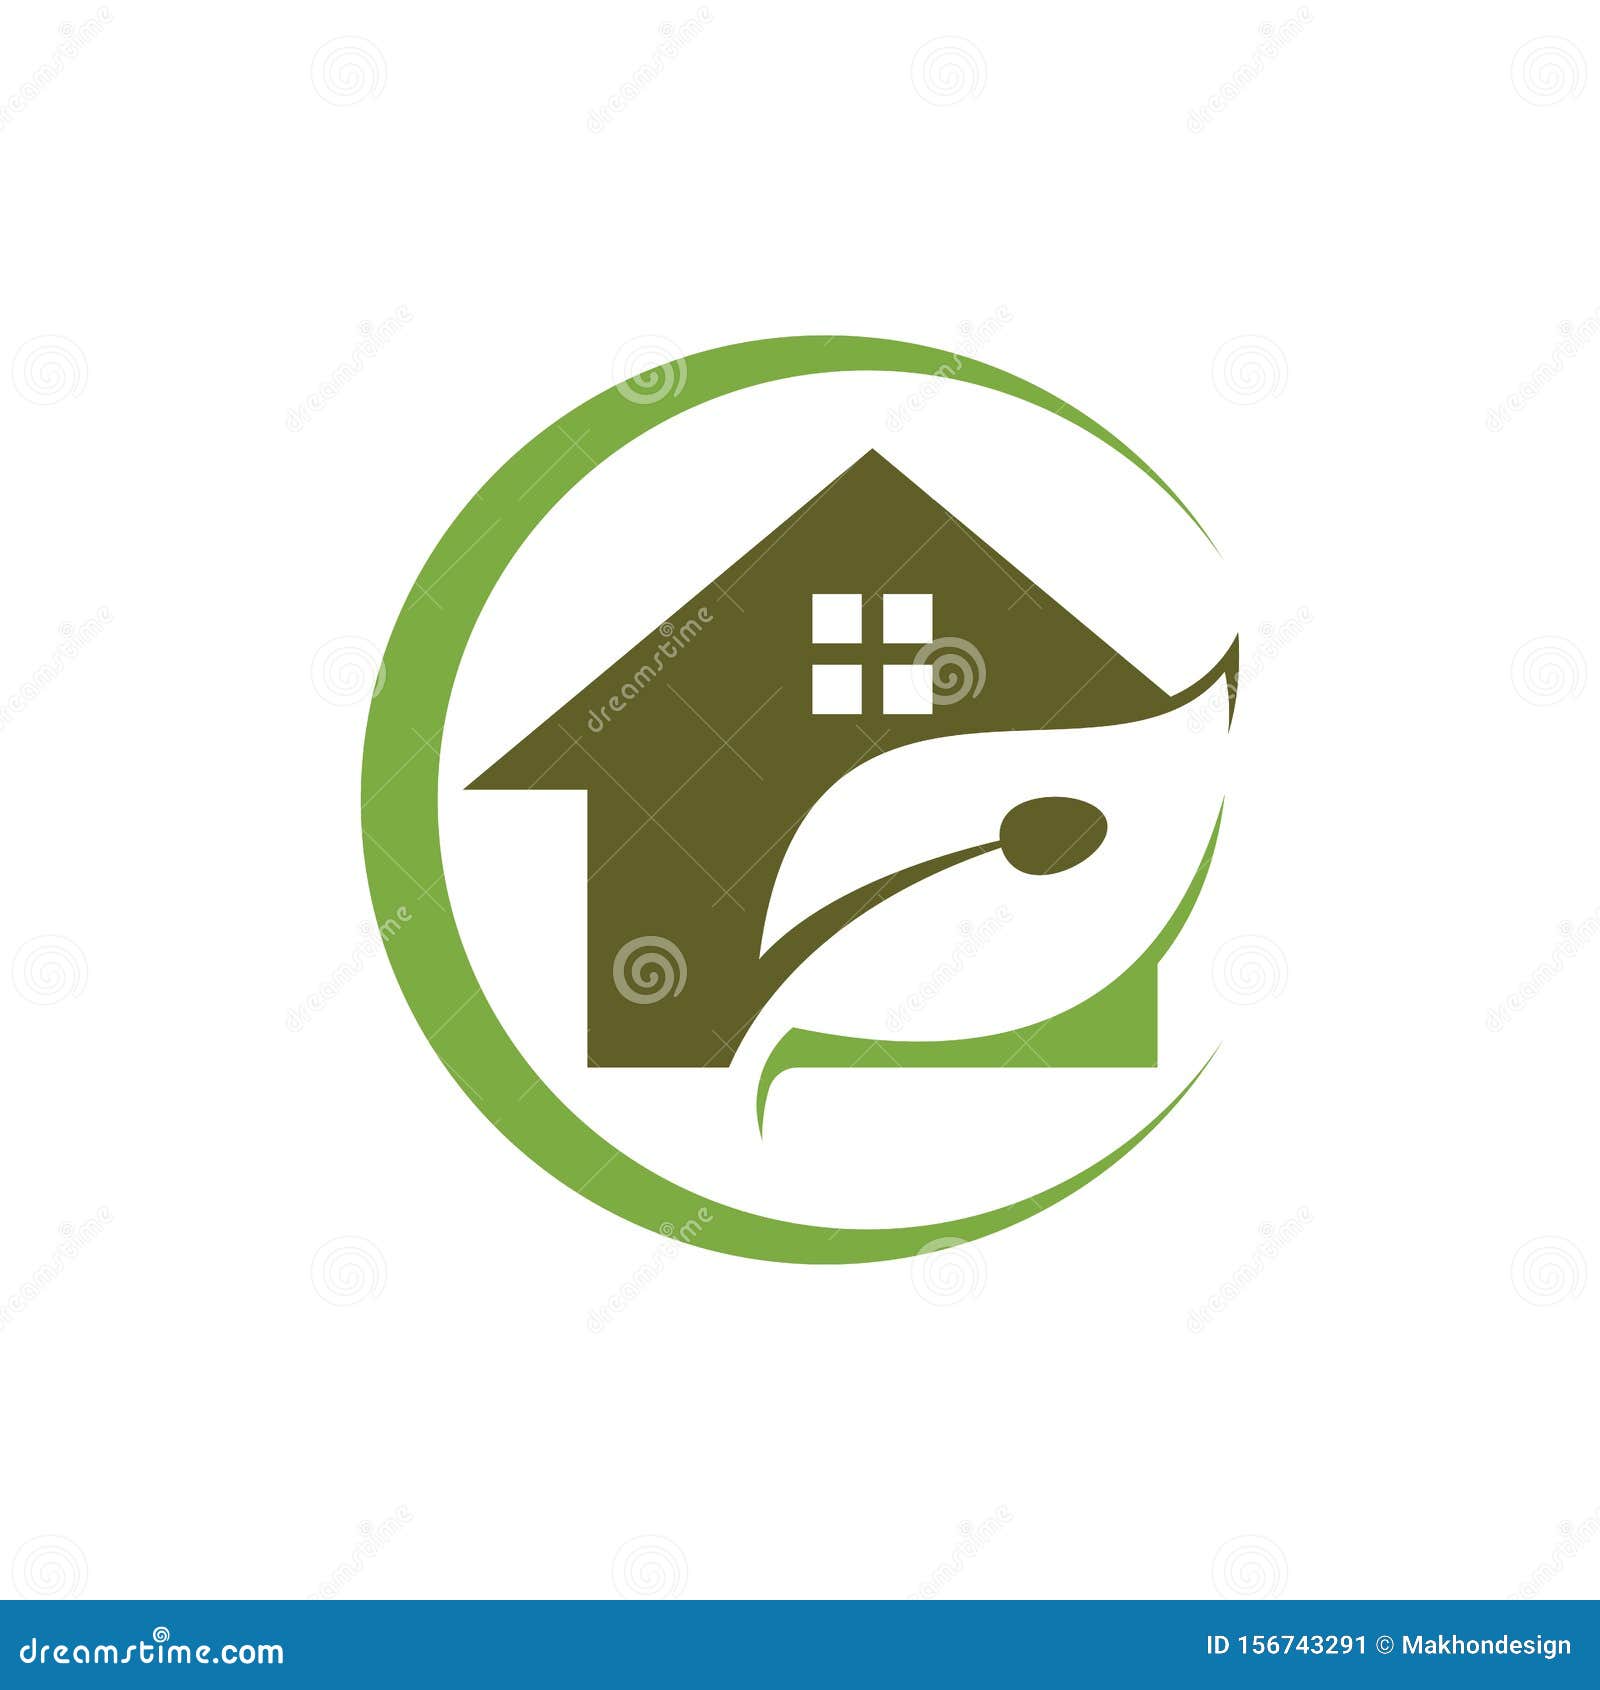 Food House, Restaurant Logo Template, Home Food Logo Design ...